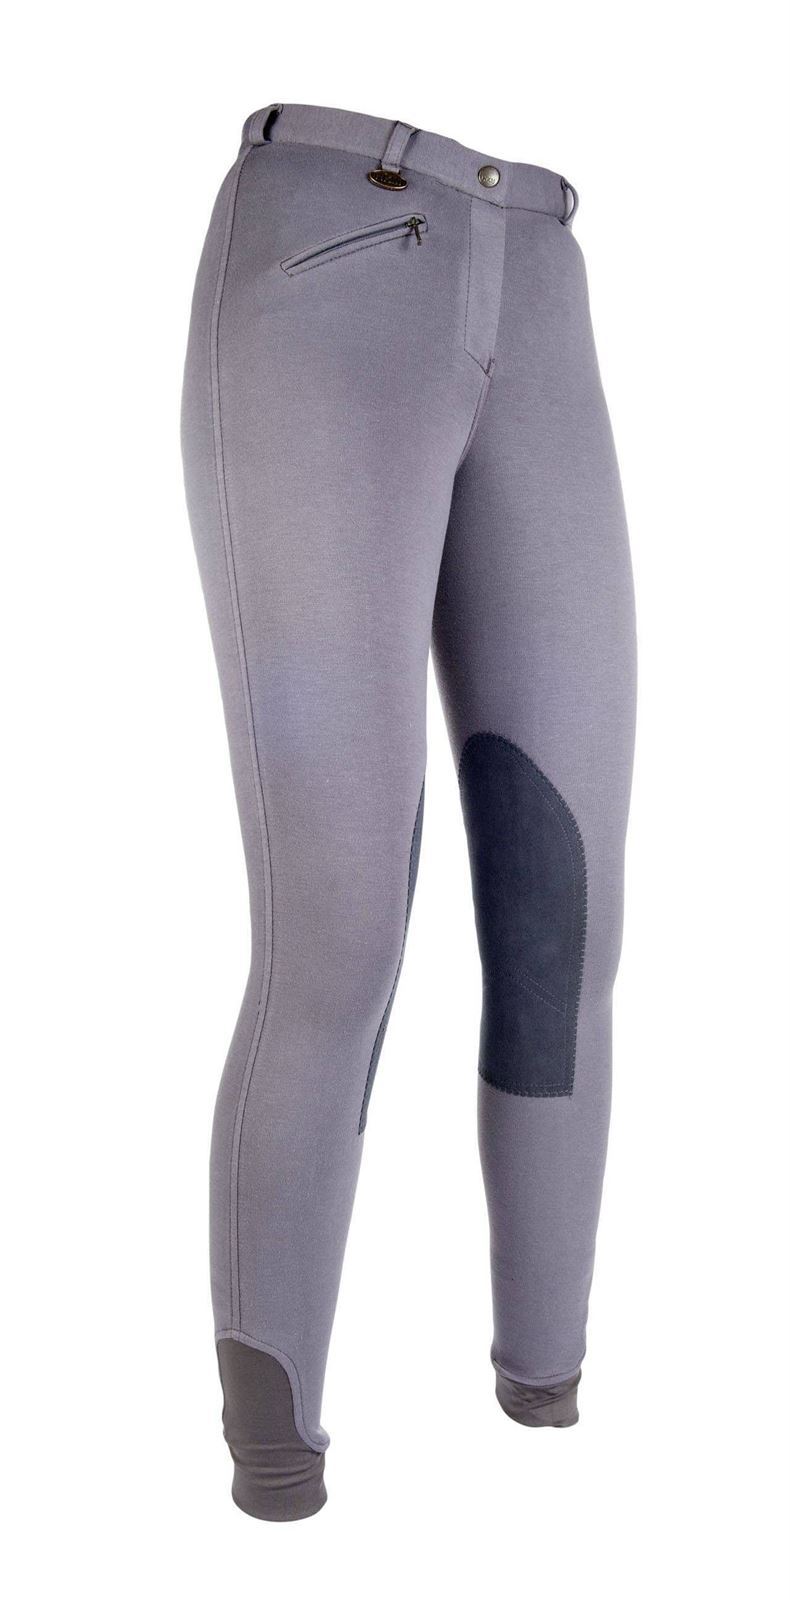 Pantalón Unisex HKM Sports Equipment, algodón gris, protección napa rodilla, tallaje infantil TALLA 158 (11-12 años) - Imagen 1